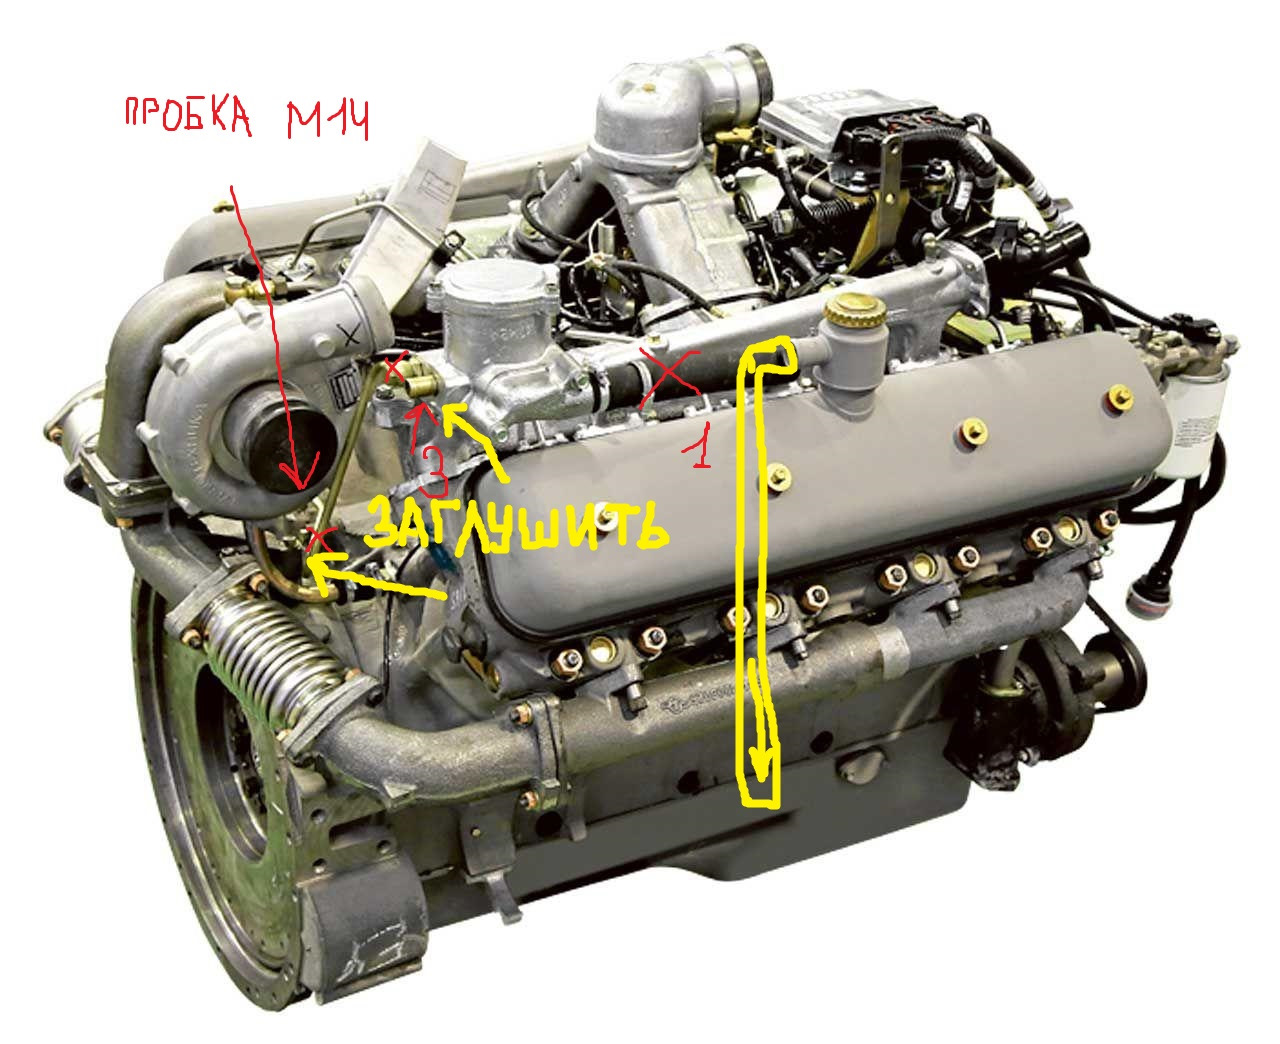 Ремонт двигателя ямз 238. Модель двигателя ЯМЗ 238. Мотор ЯМЗ 6582. Двигатель ЯМЗ 236 евро 4. Двигатель ЯМЗ 6582.10.